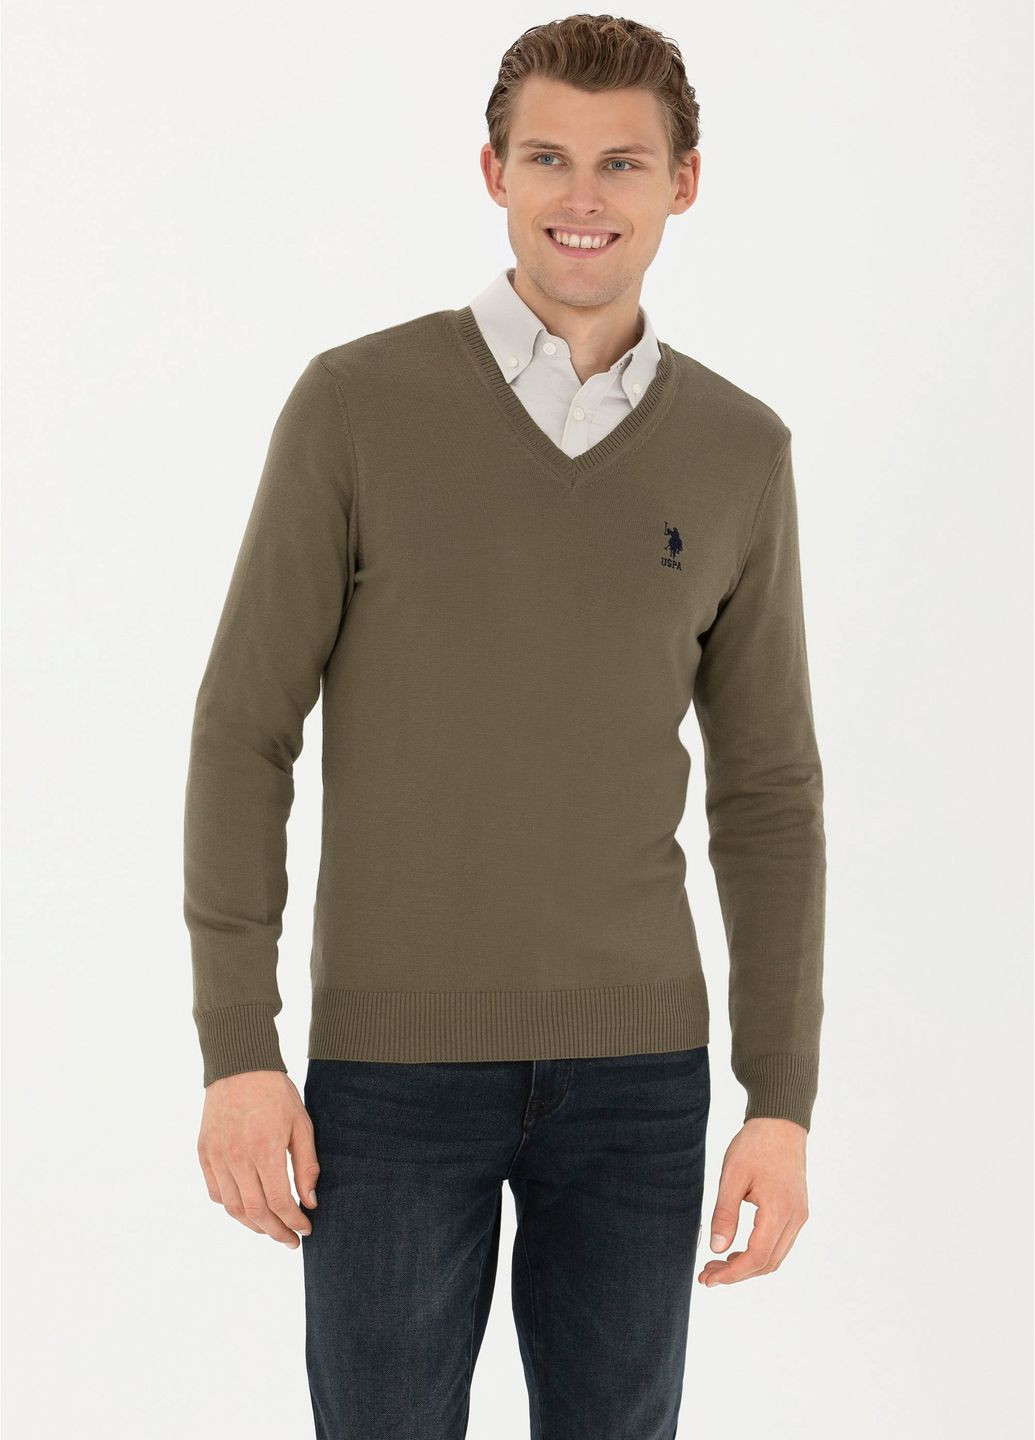 Оливковый (хаки) свитер мужской U.S. Polo Assn.